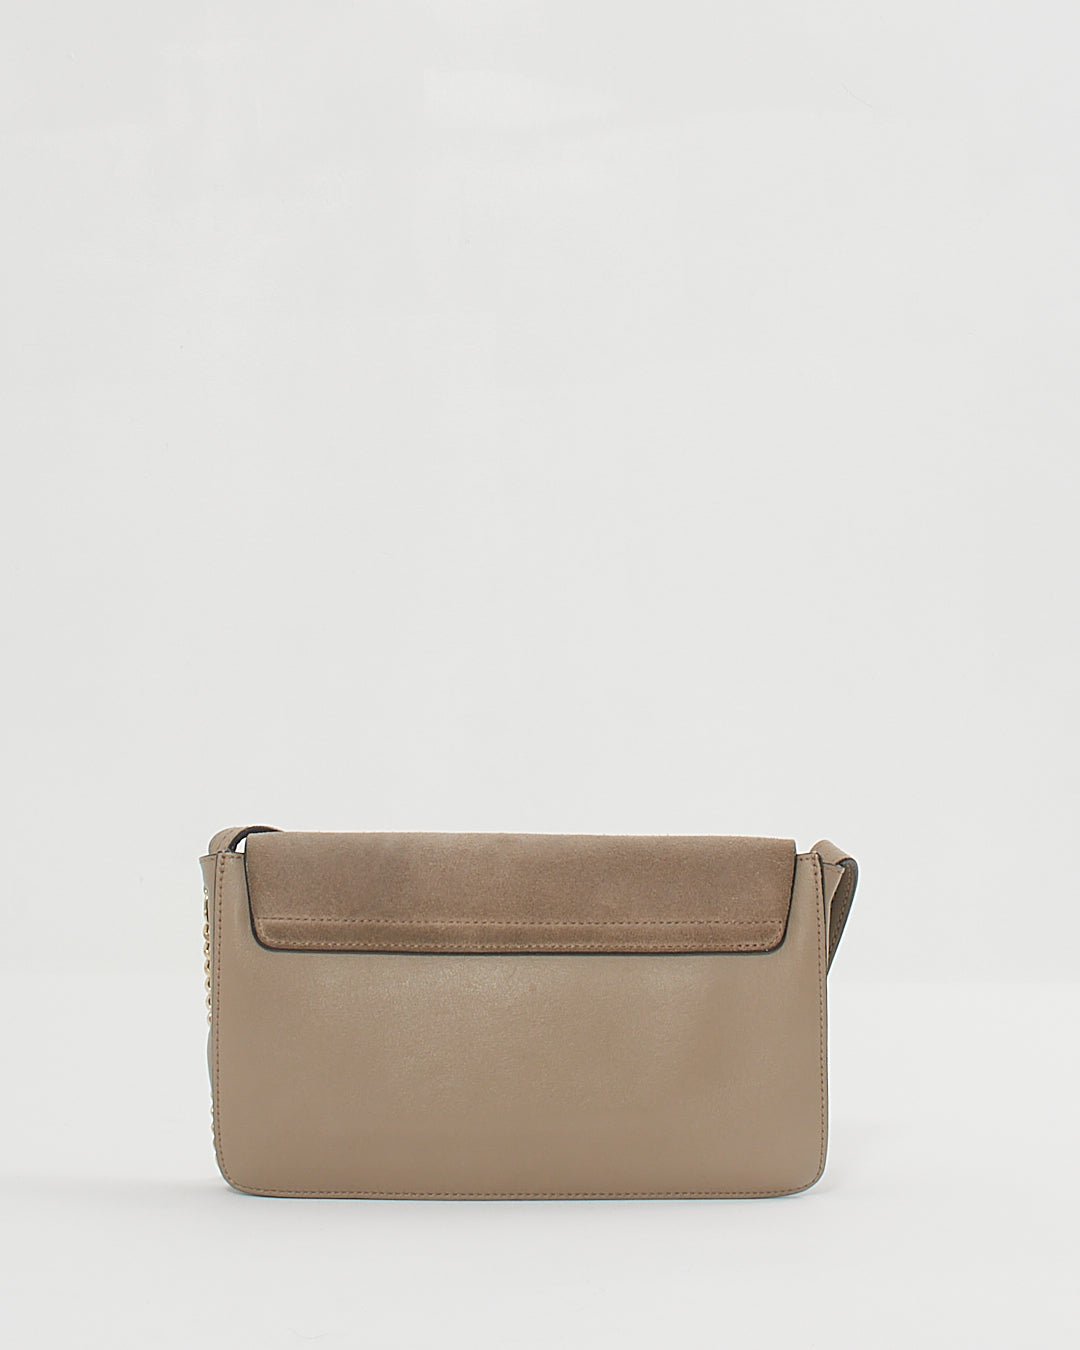 Chloé Motty Grey Leather Small Faye Shoulder Bag